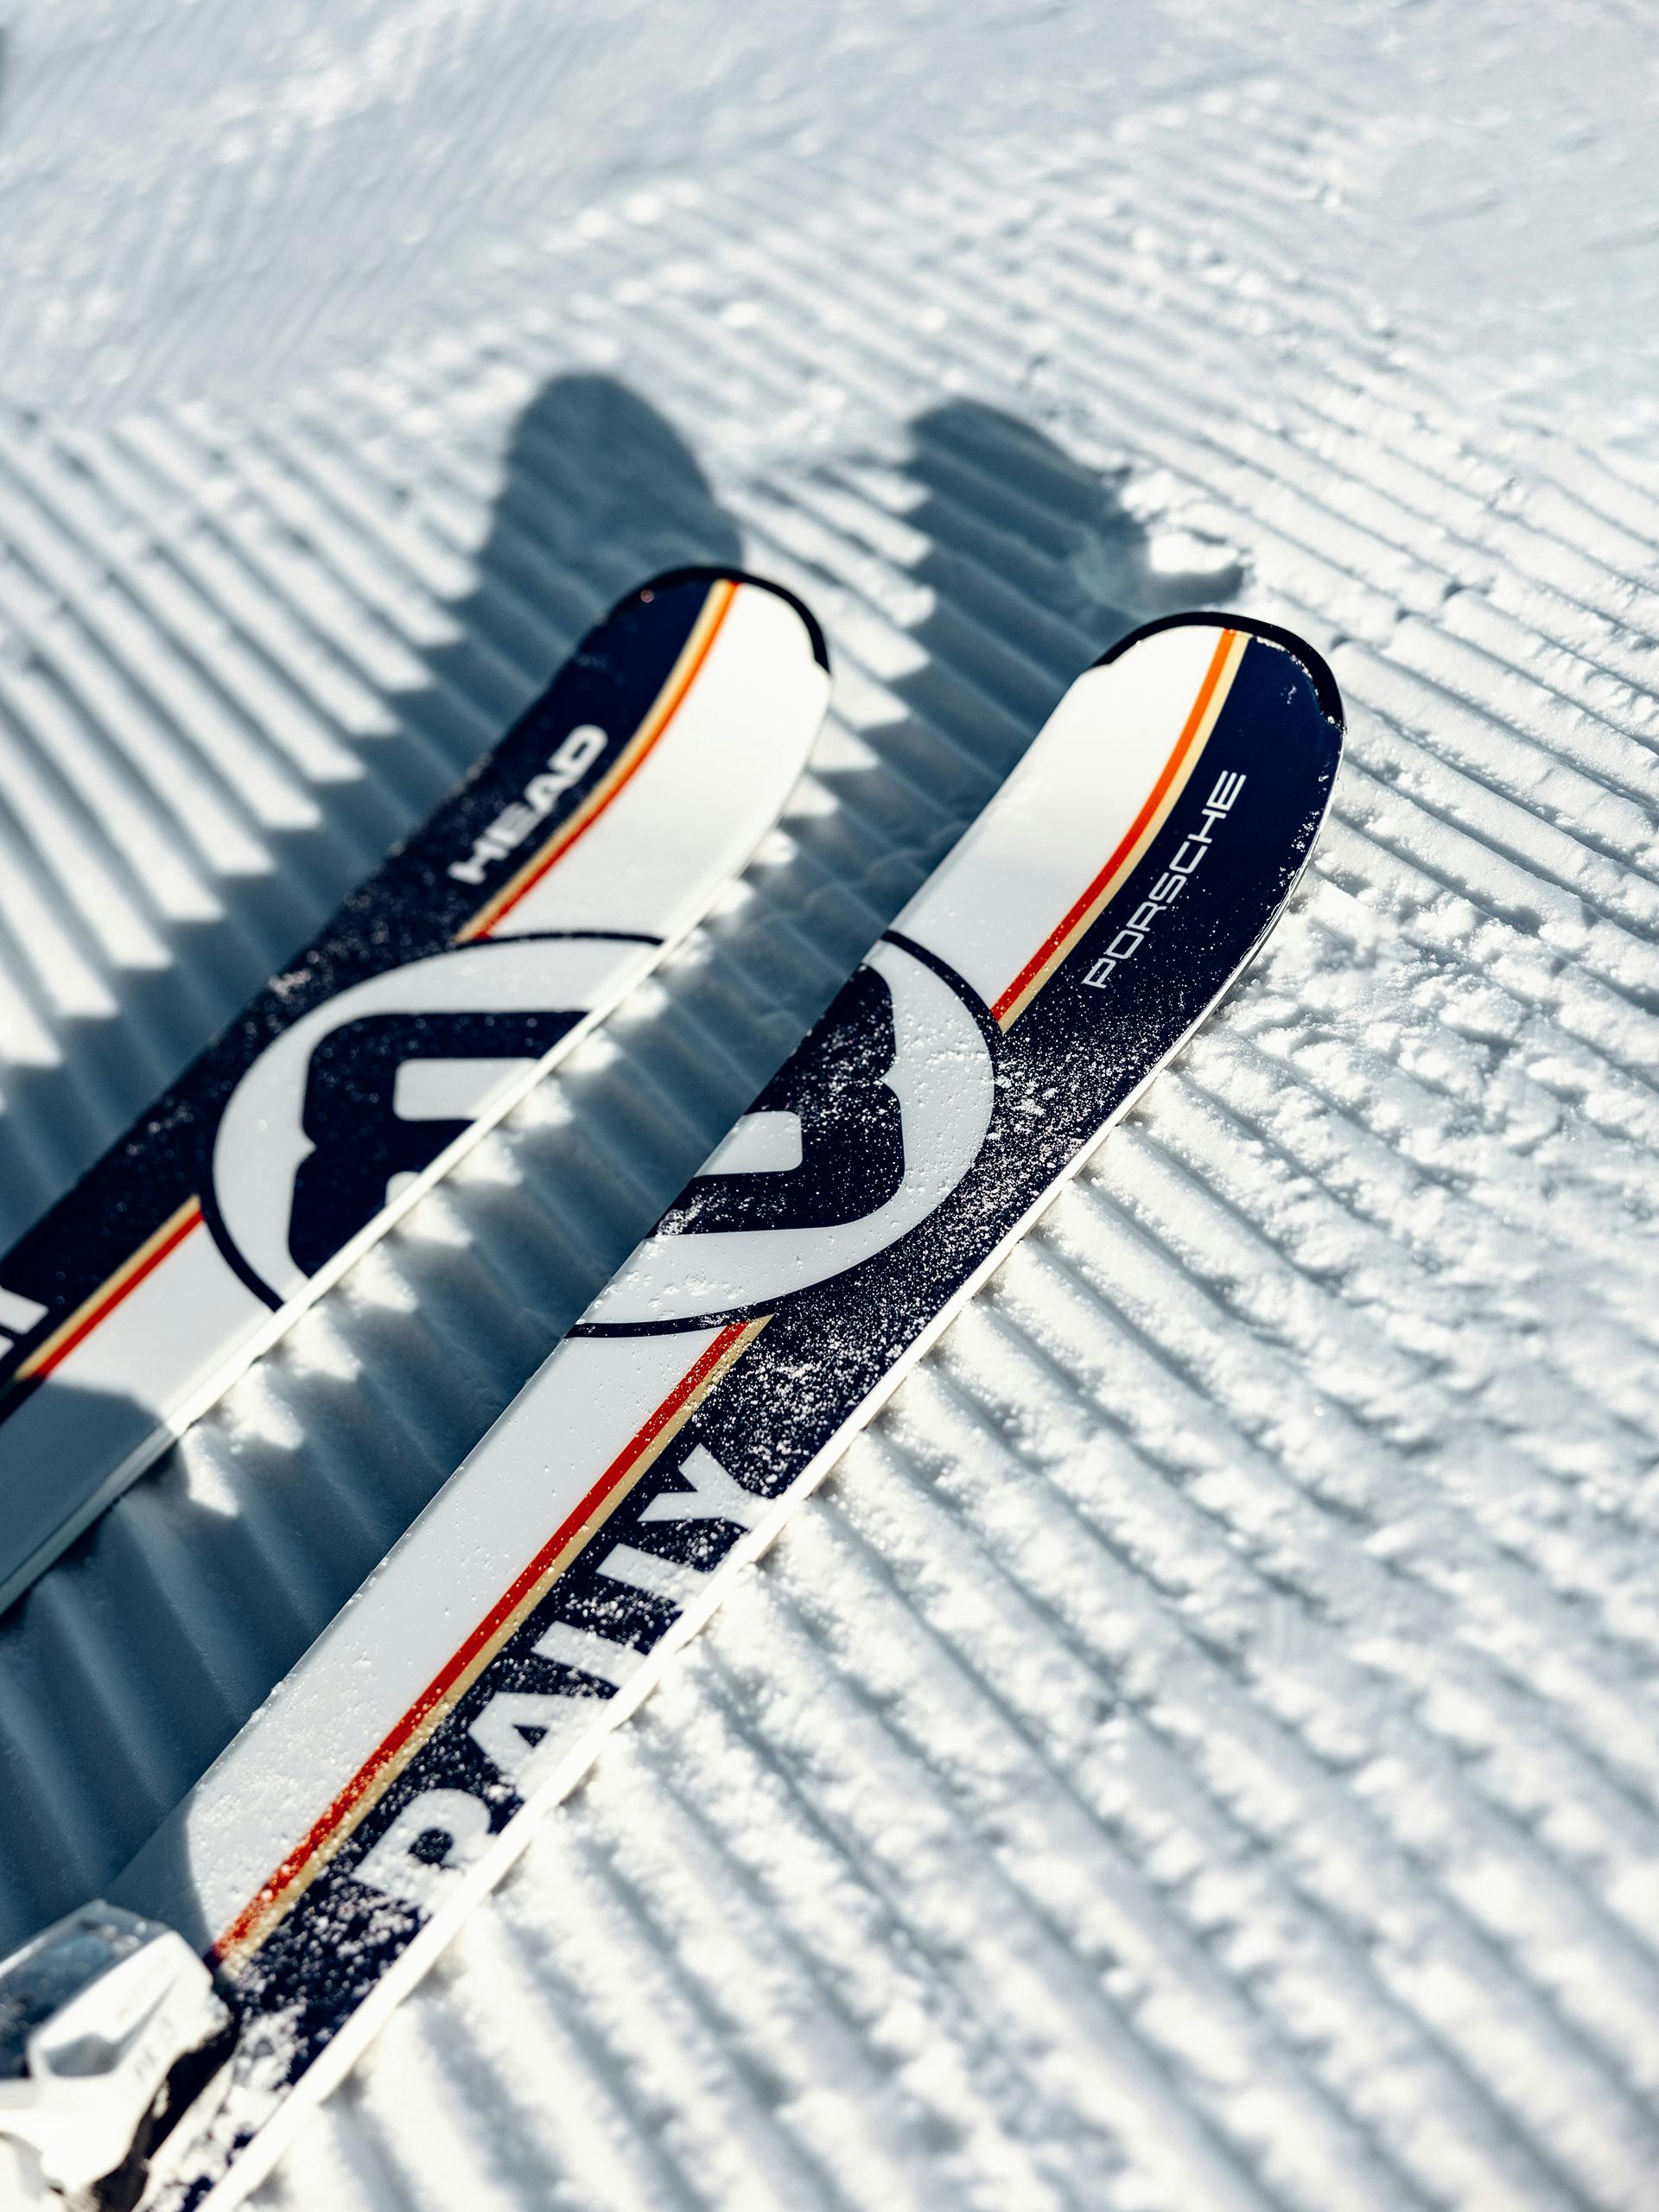 New Porsche Design HEAD Skis in the snow